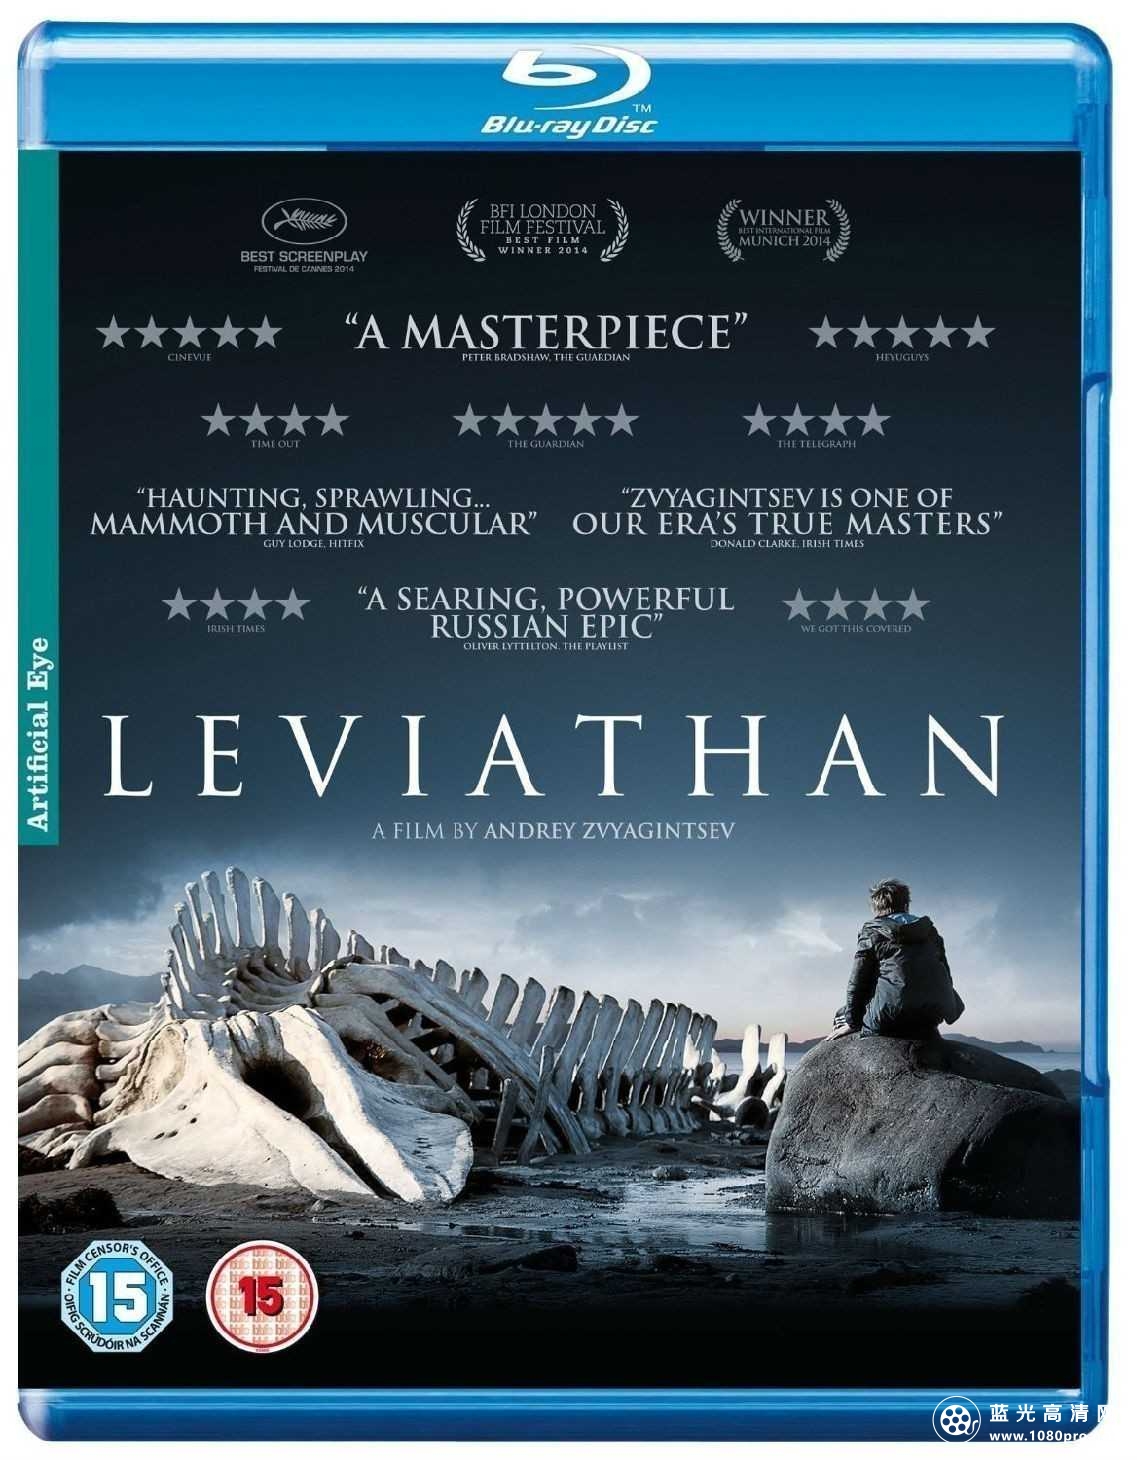 利维坦/缠绕之蛇 Leviathan.2014.720p.BluRay.x264-FAPCAVE 6.54GB-1.jpg